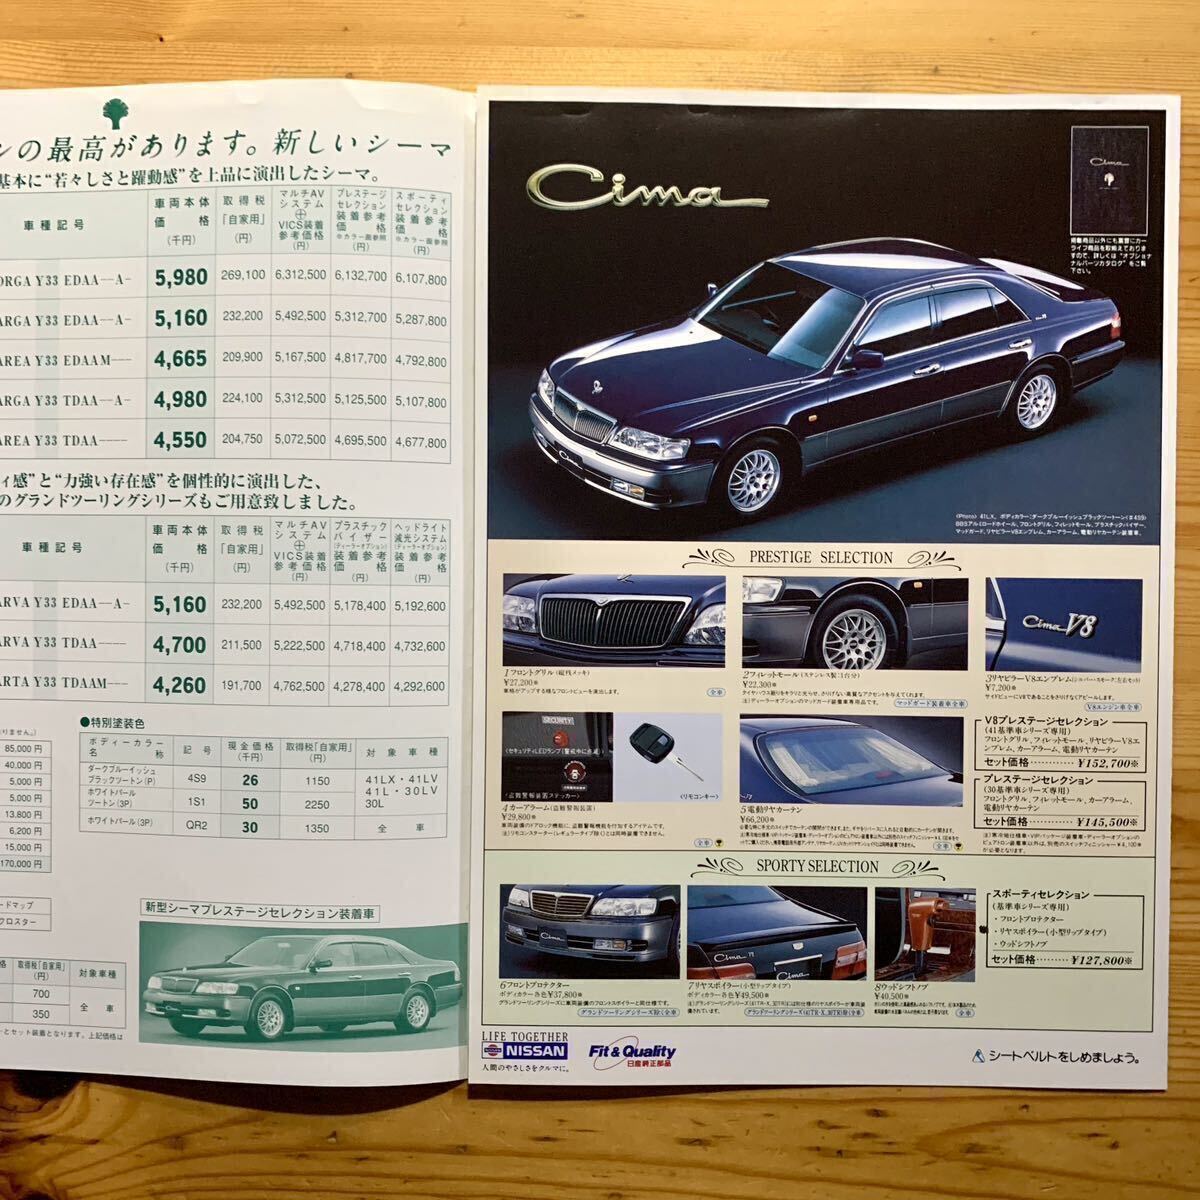 【 NISSAN - シーマ カタログ 】 《 新車販売価格表付 1996年6月4日現在 》41 LX・41 LV / 30 LV・41 L / 30 L・41 TR-X / 30 TR・30 T_画像8